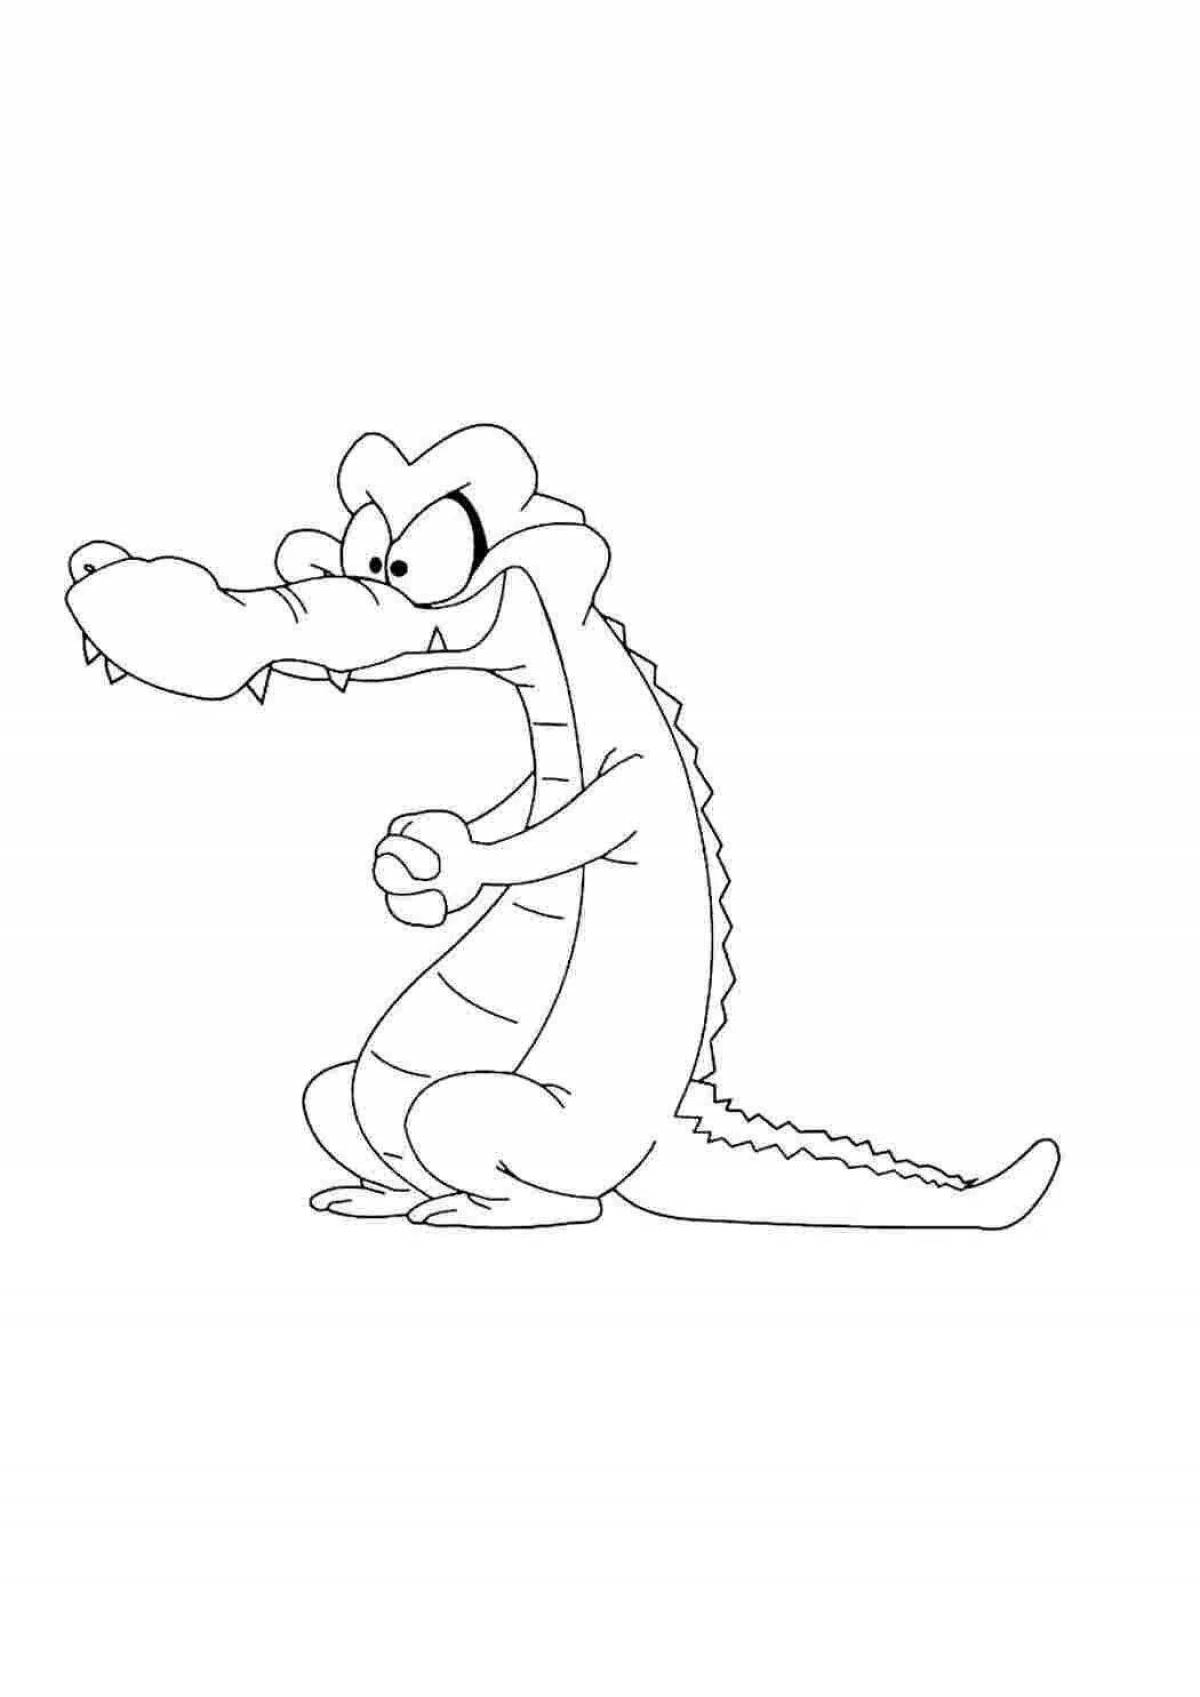 Naughty swamp crocodile